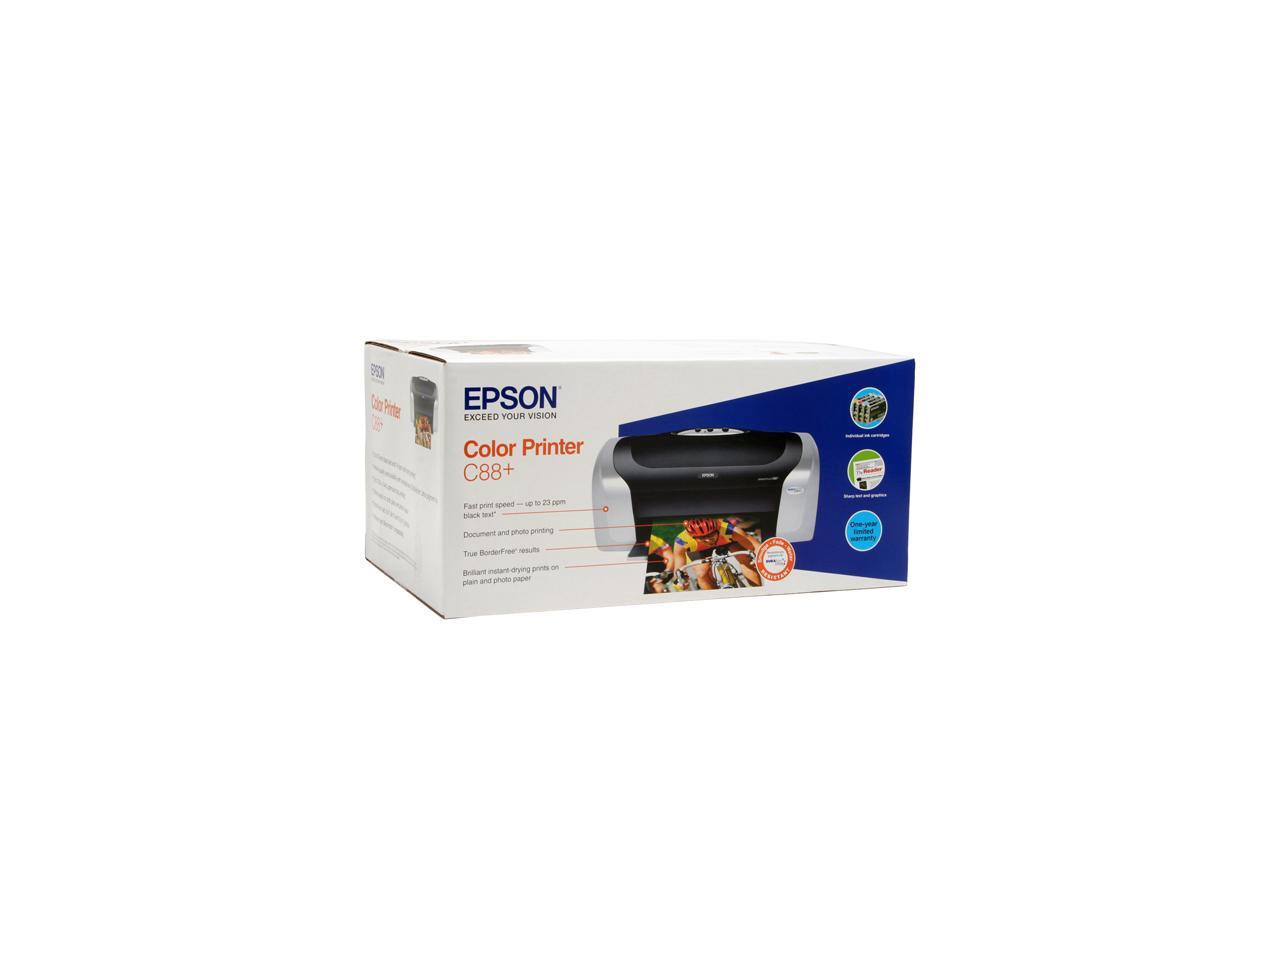 Epson Stylus C88 C11c617121f Inkjet Personal Color Printer Neweggca 4554